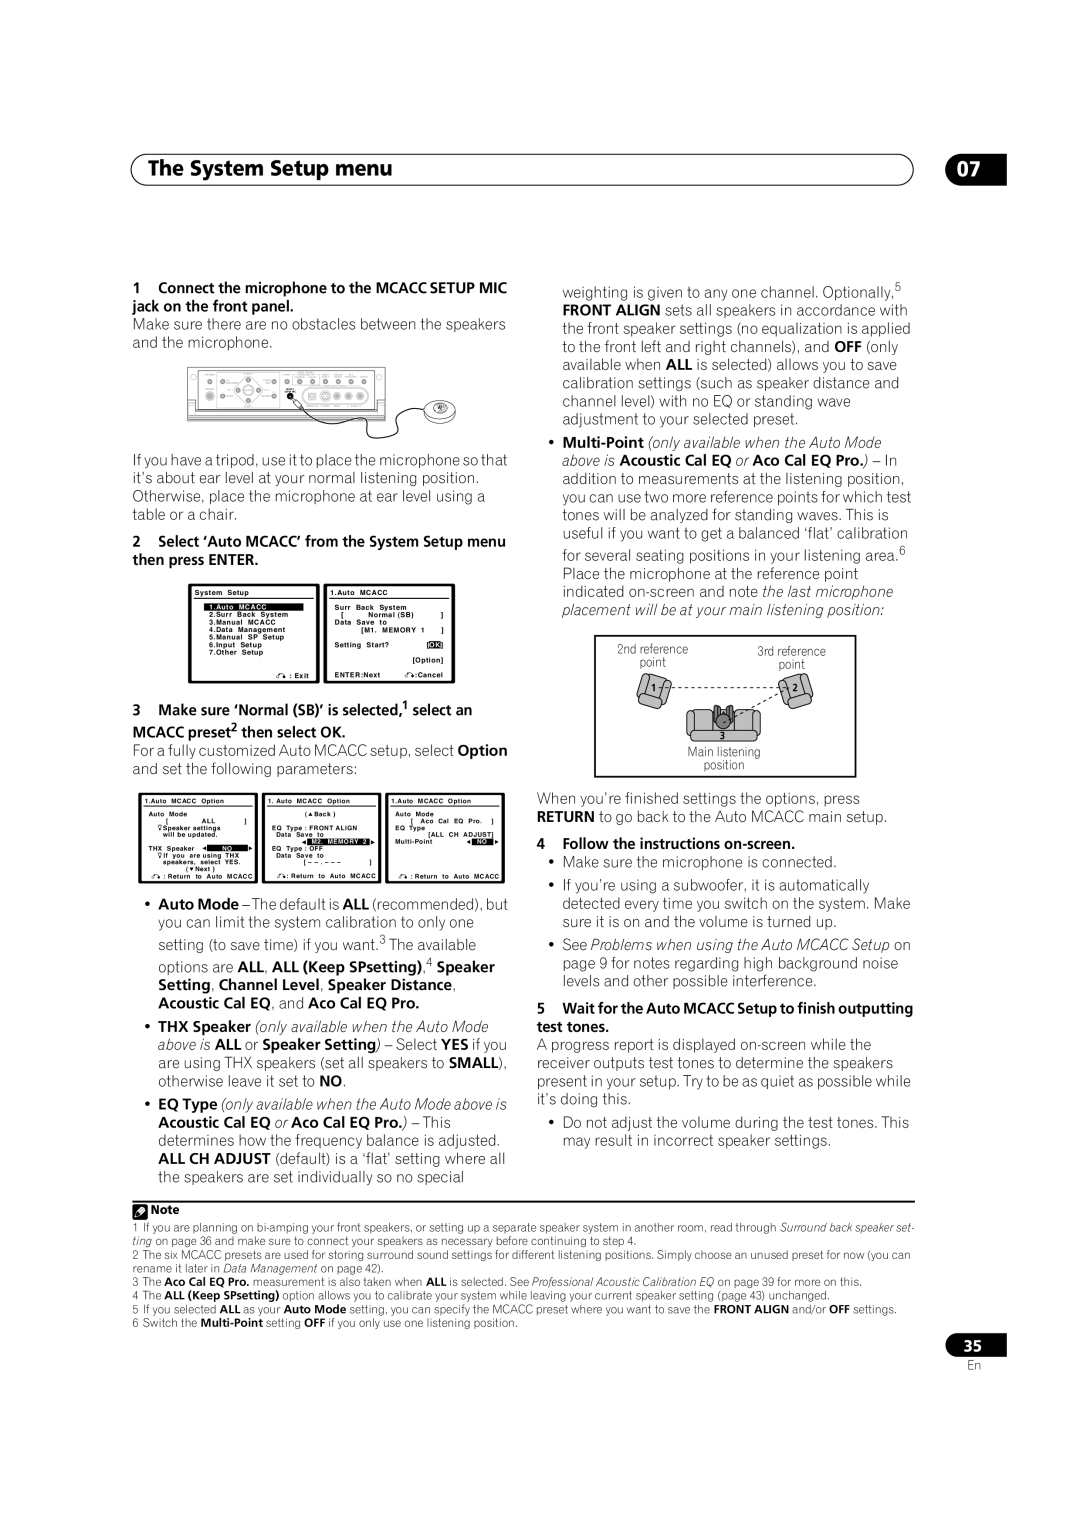 Pioneer VSX-84TXSi-S, VSX-84TXSI The System Setup menu, Select ‘Auto MCACC’ from the System Setup menu then press ENTER 